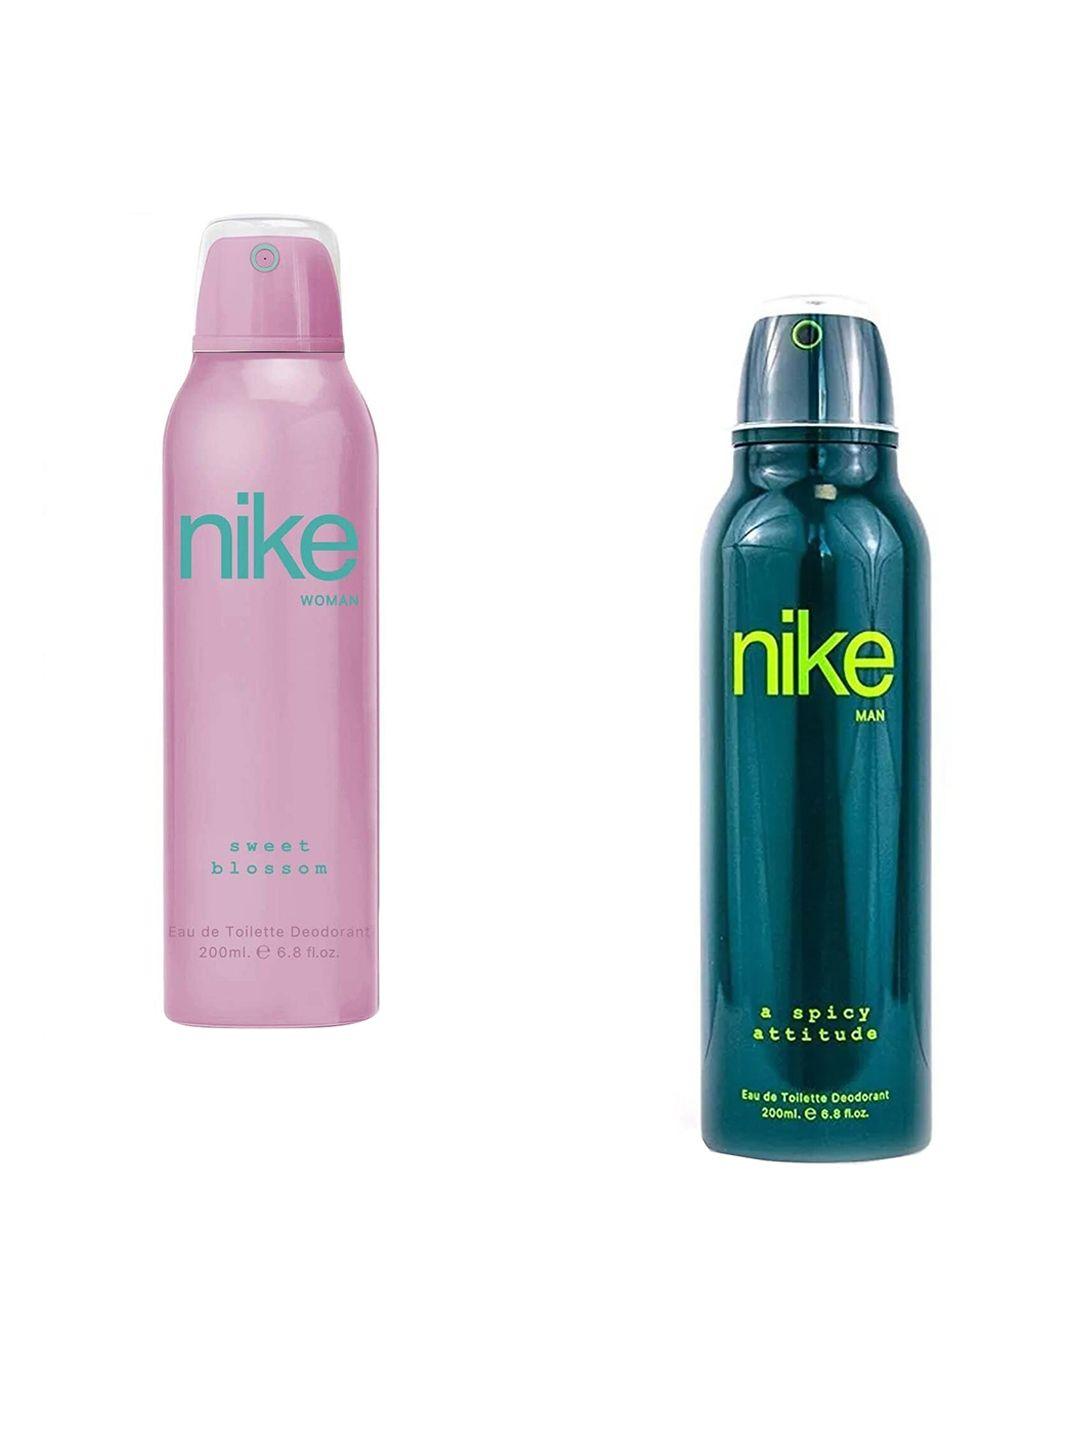 nike-set-of-2-edt-deodorants---woman-sweet-blossom-&-man-a-spicy-attitude---200ml-each